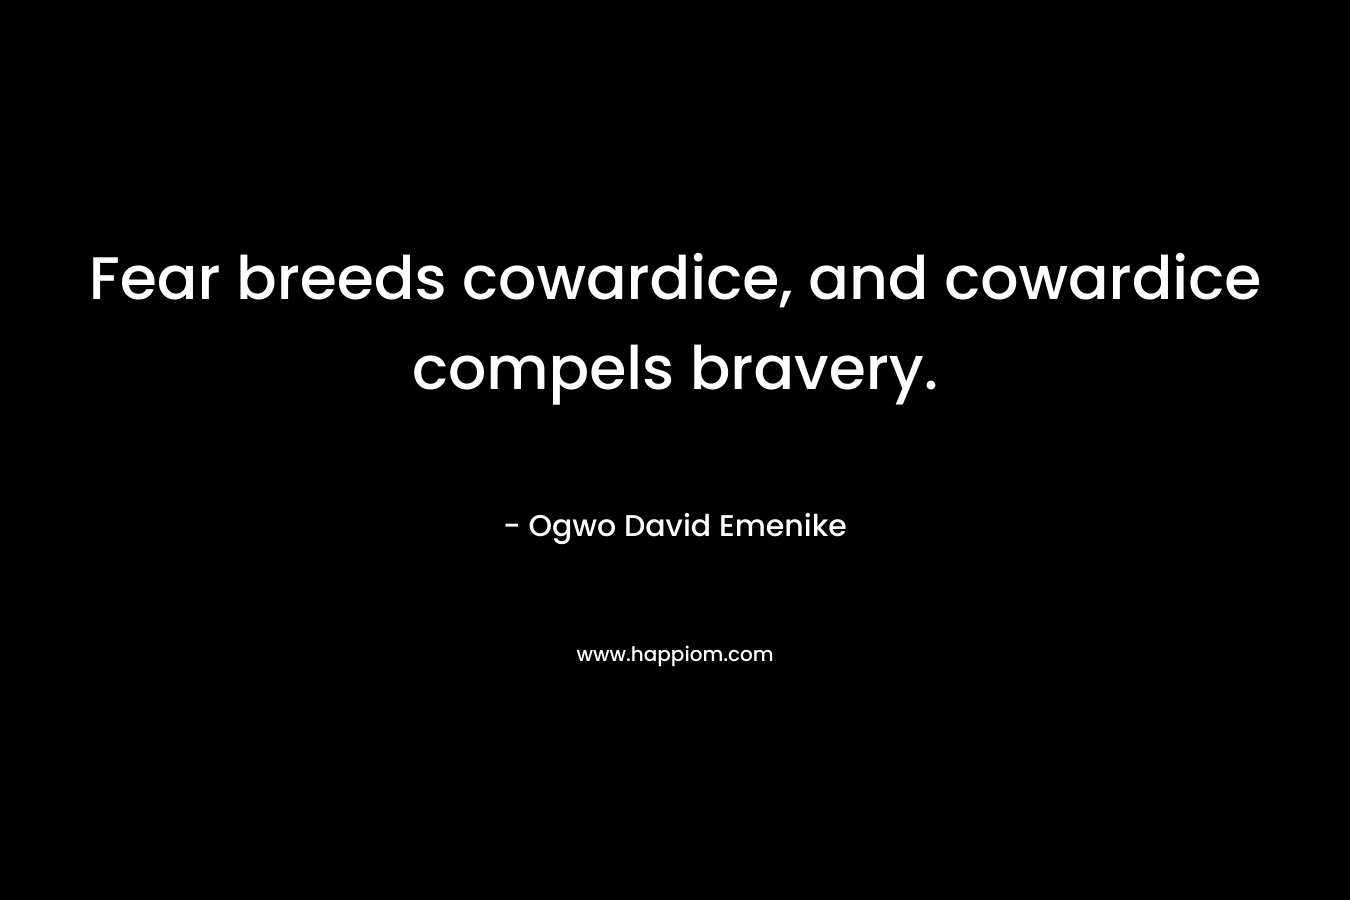 Fear breeds cowardice, and cowardice compels bravery.